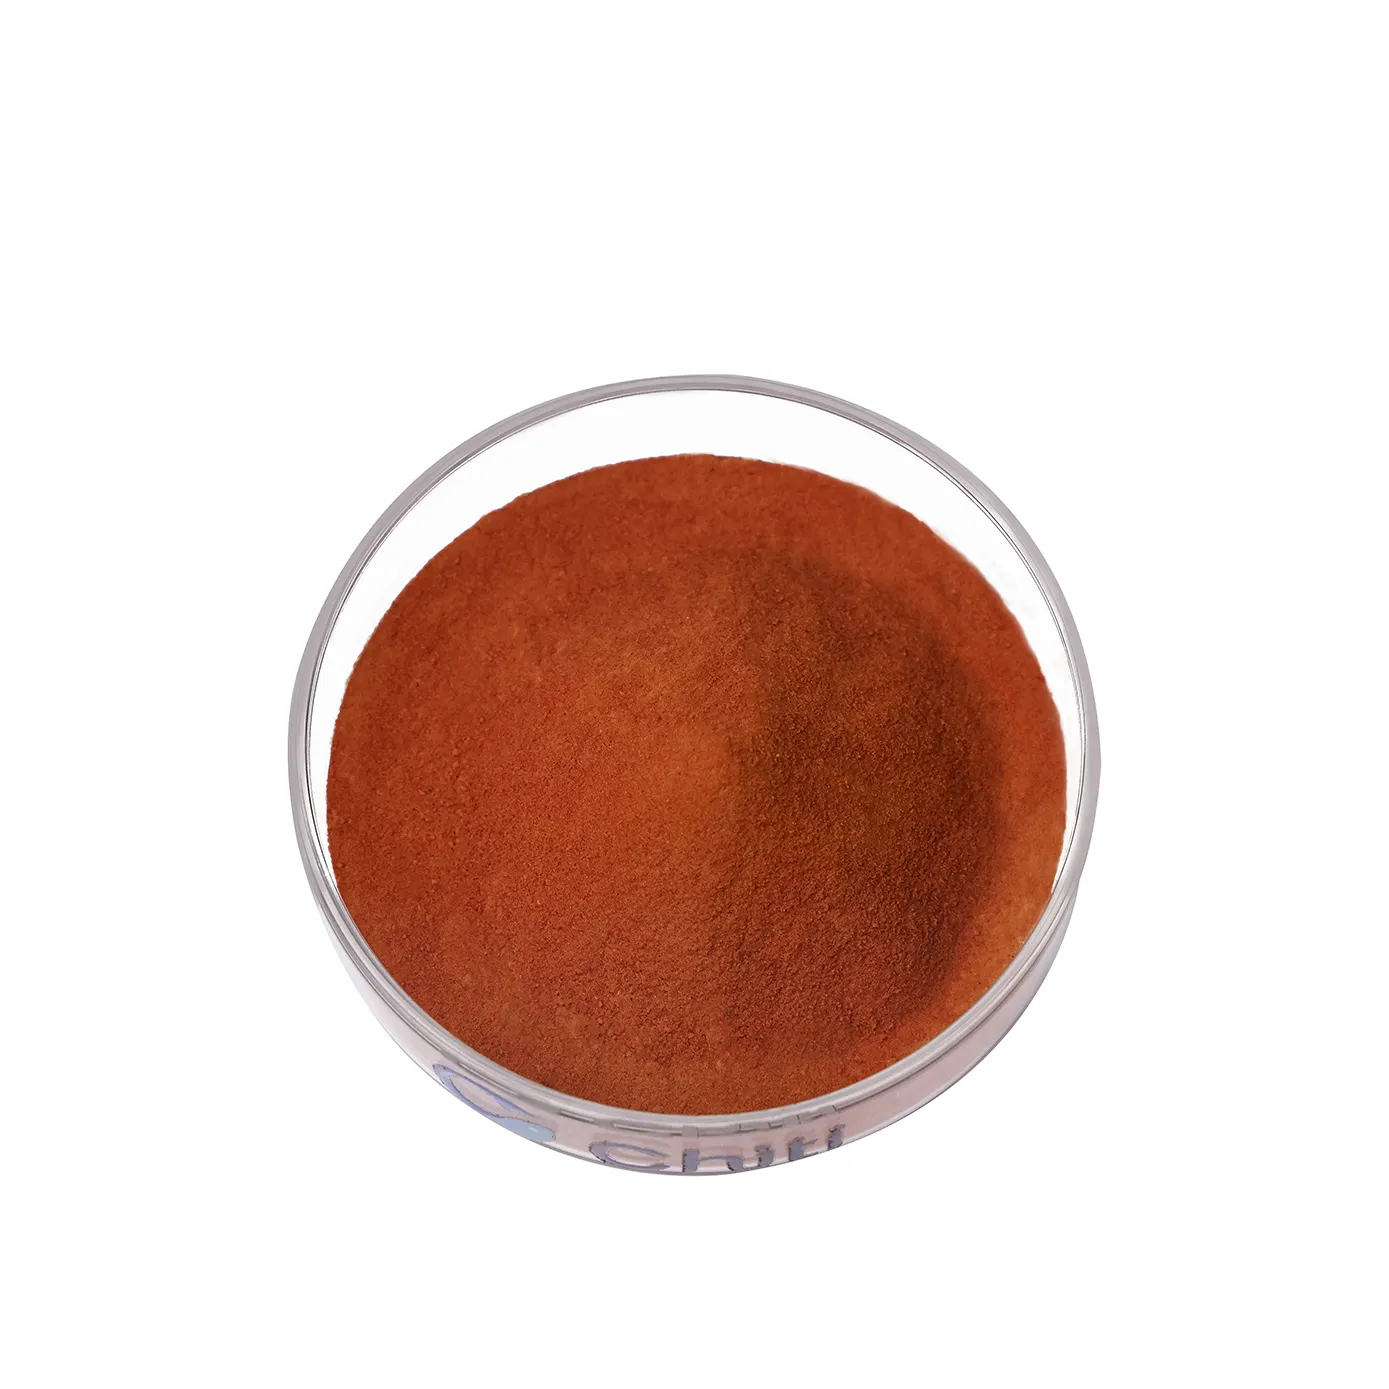 Chiti Factory Tomato Powder Nutrition Superfood Tomato powder 100% factory wholesale no added pigments Dry tomato powder